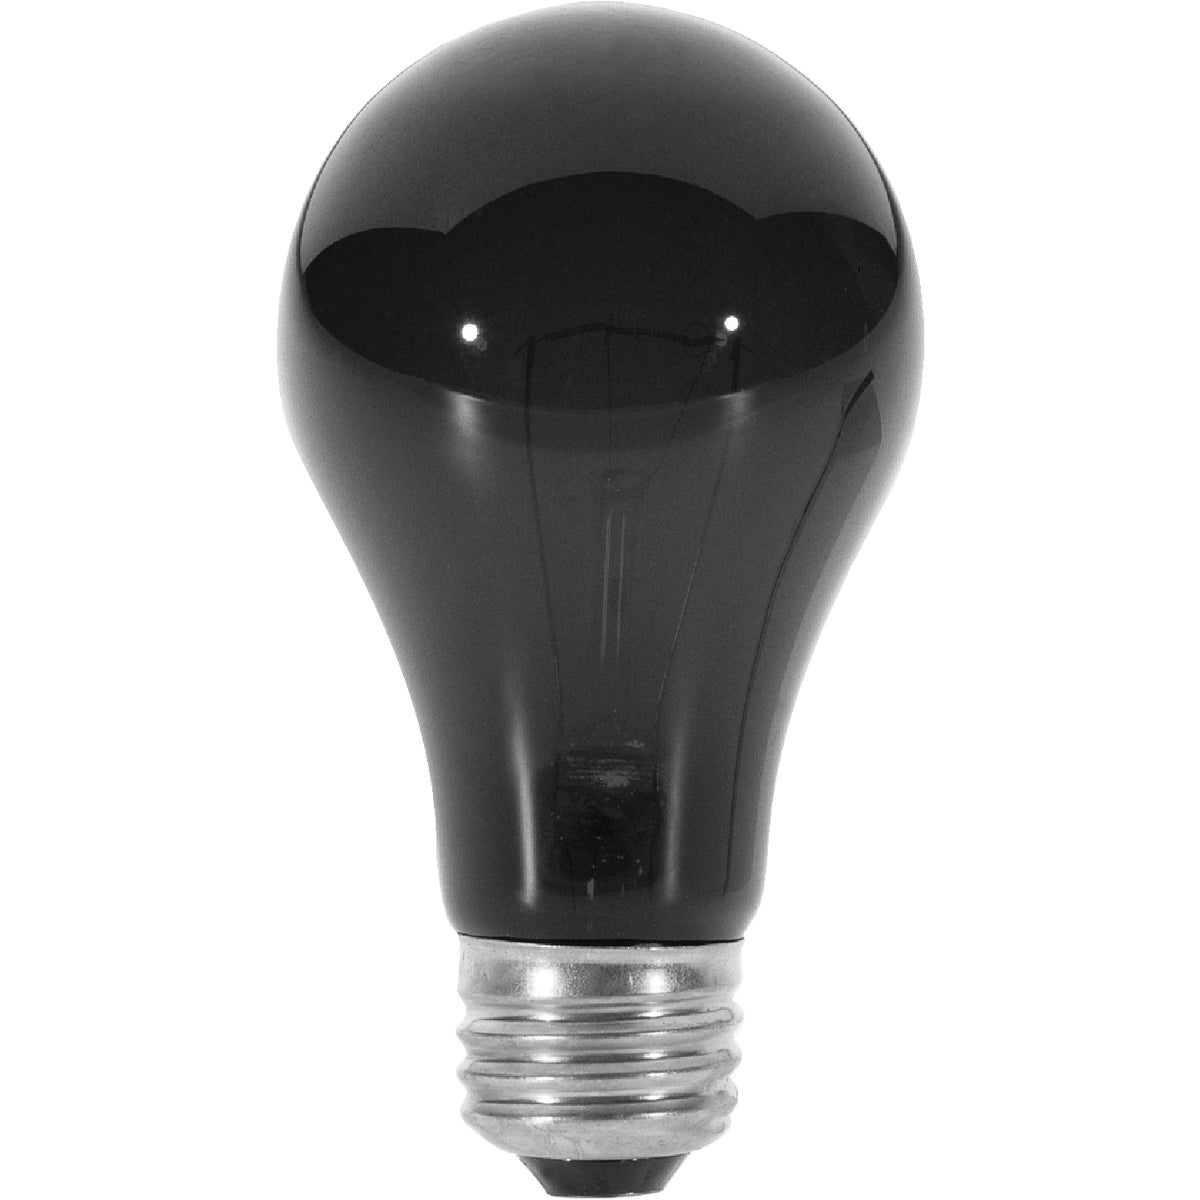 Item 540714, A19 incandescent blacklight light bulb with medium base.